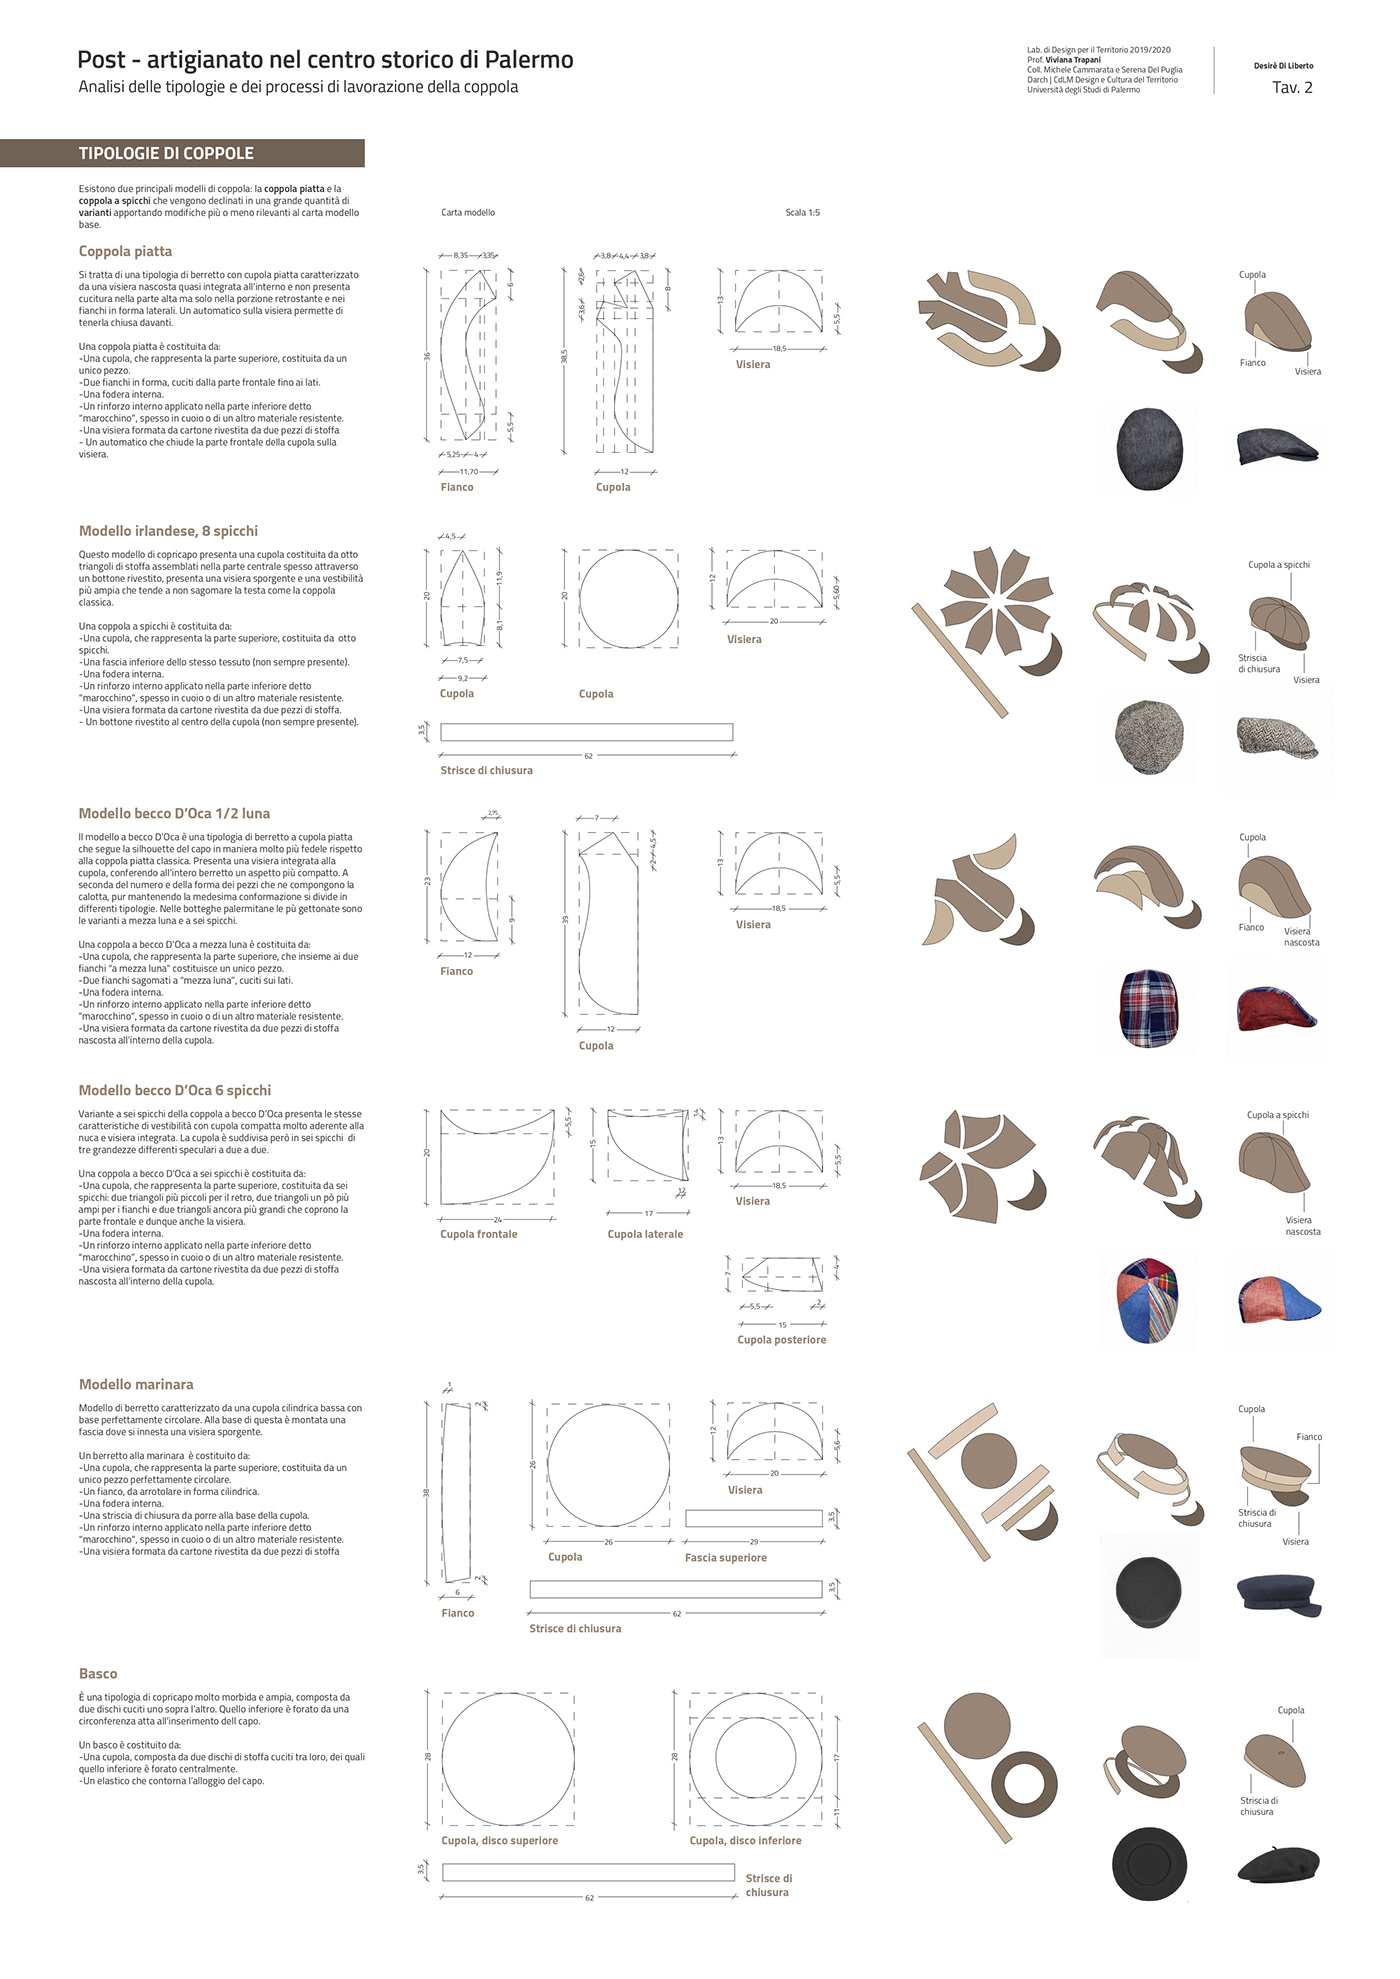 design disegno industriale artigianato coppola product designer